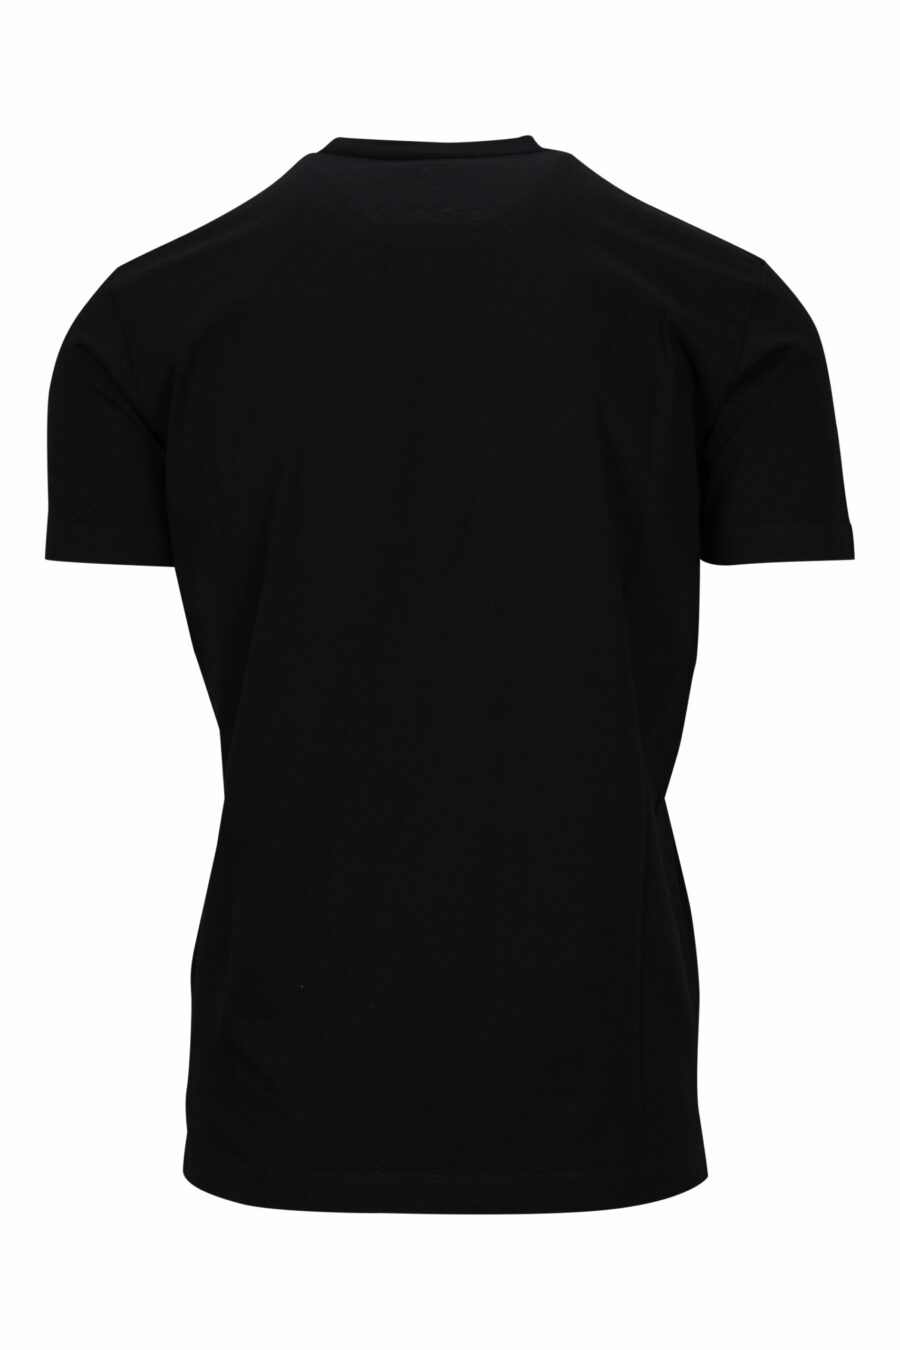 Camiseta negra con maxilogo perro baloncesto - 8054148332662 1 scaled